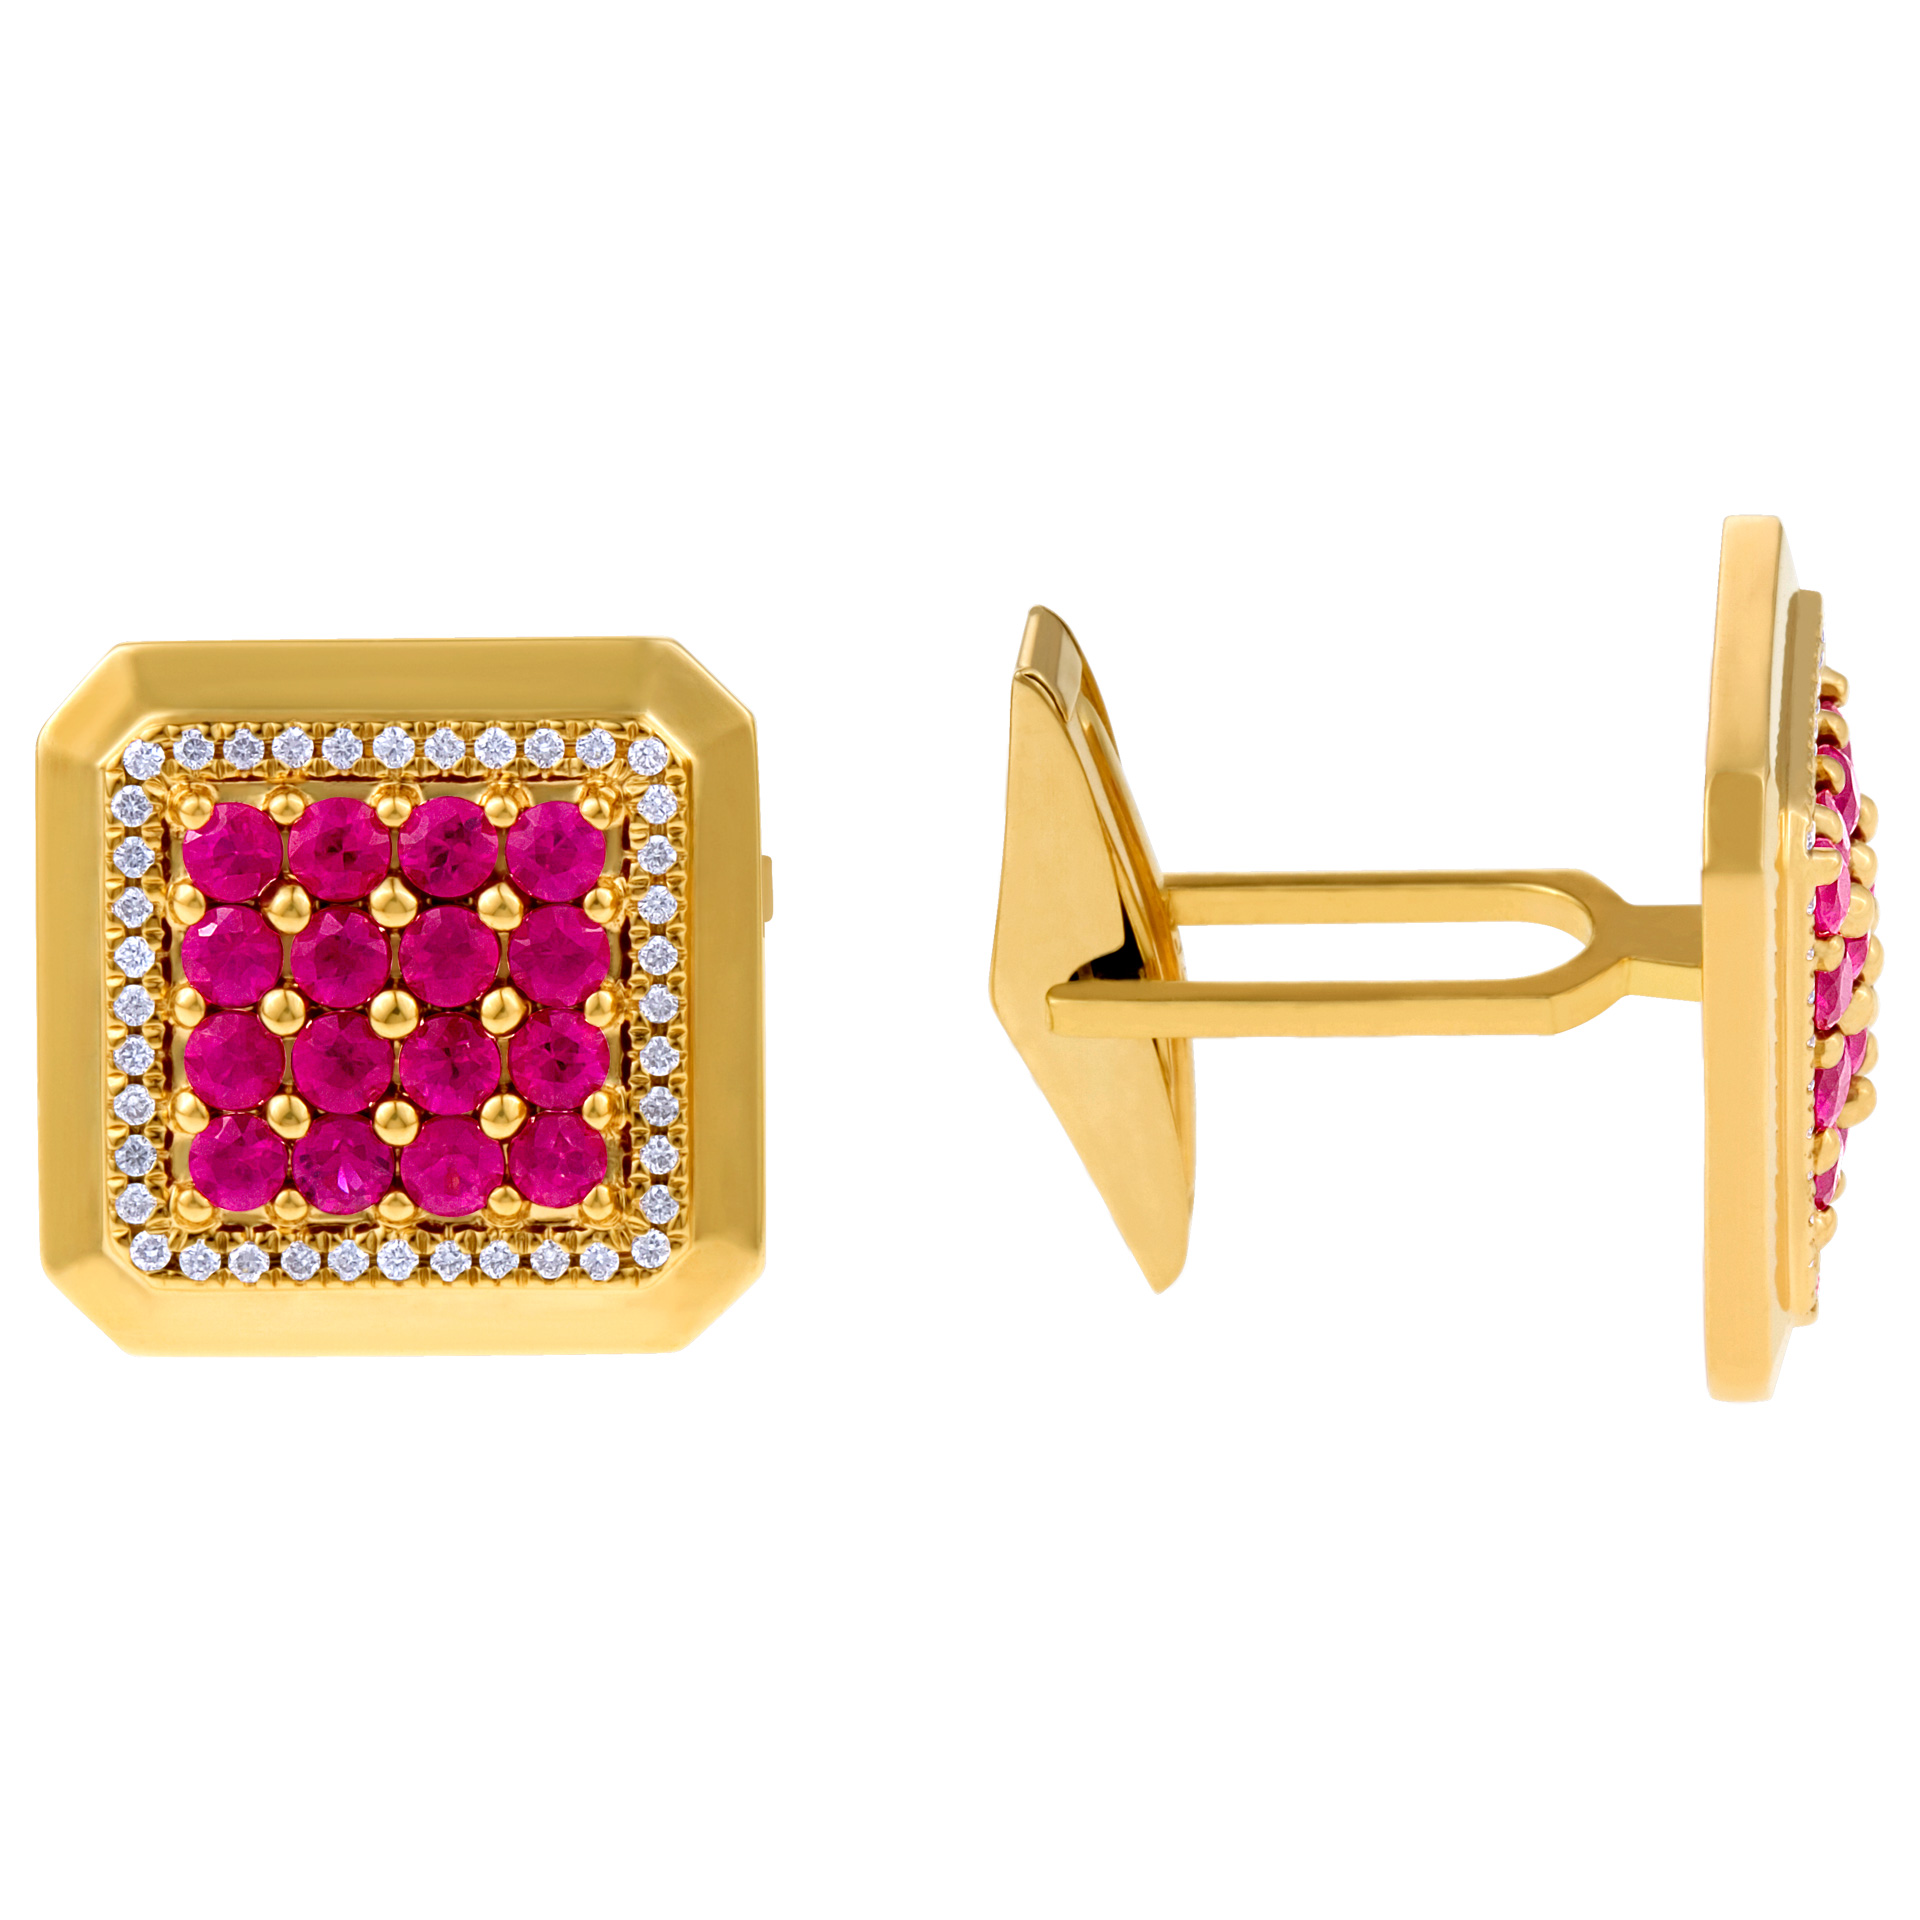 Stunning diamond and ruby cufflinks in 18k yellow gold image 1